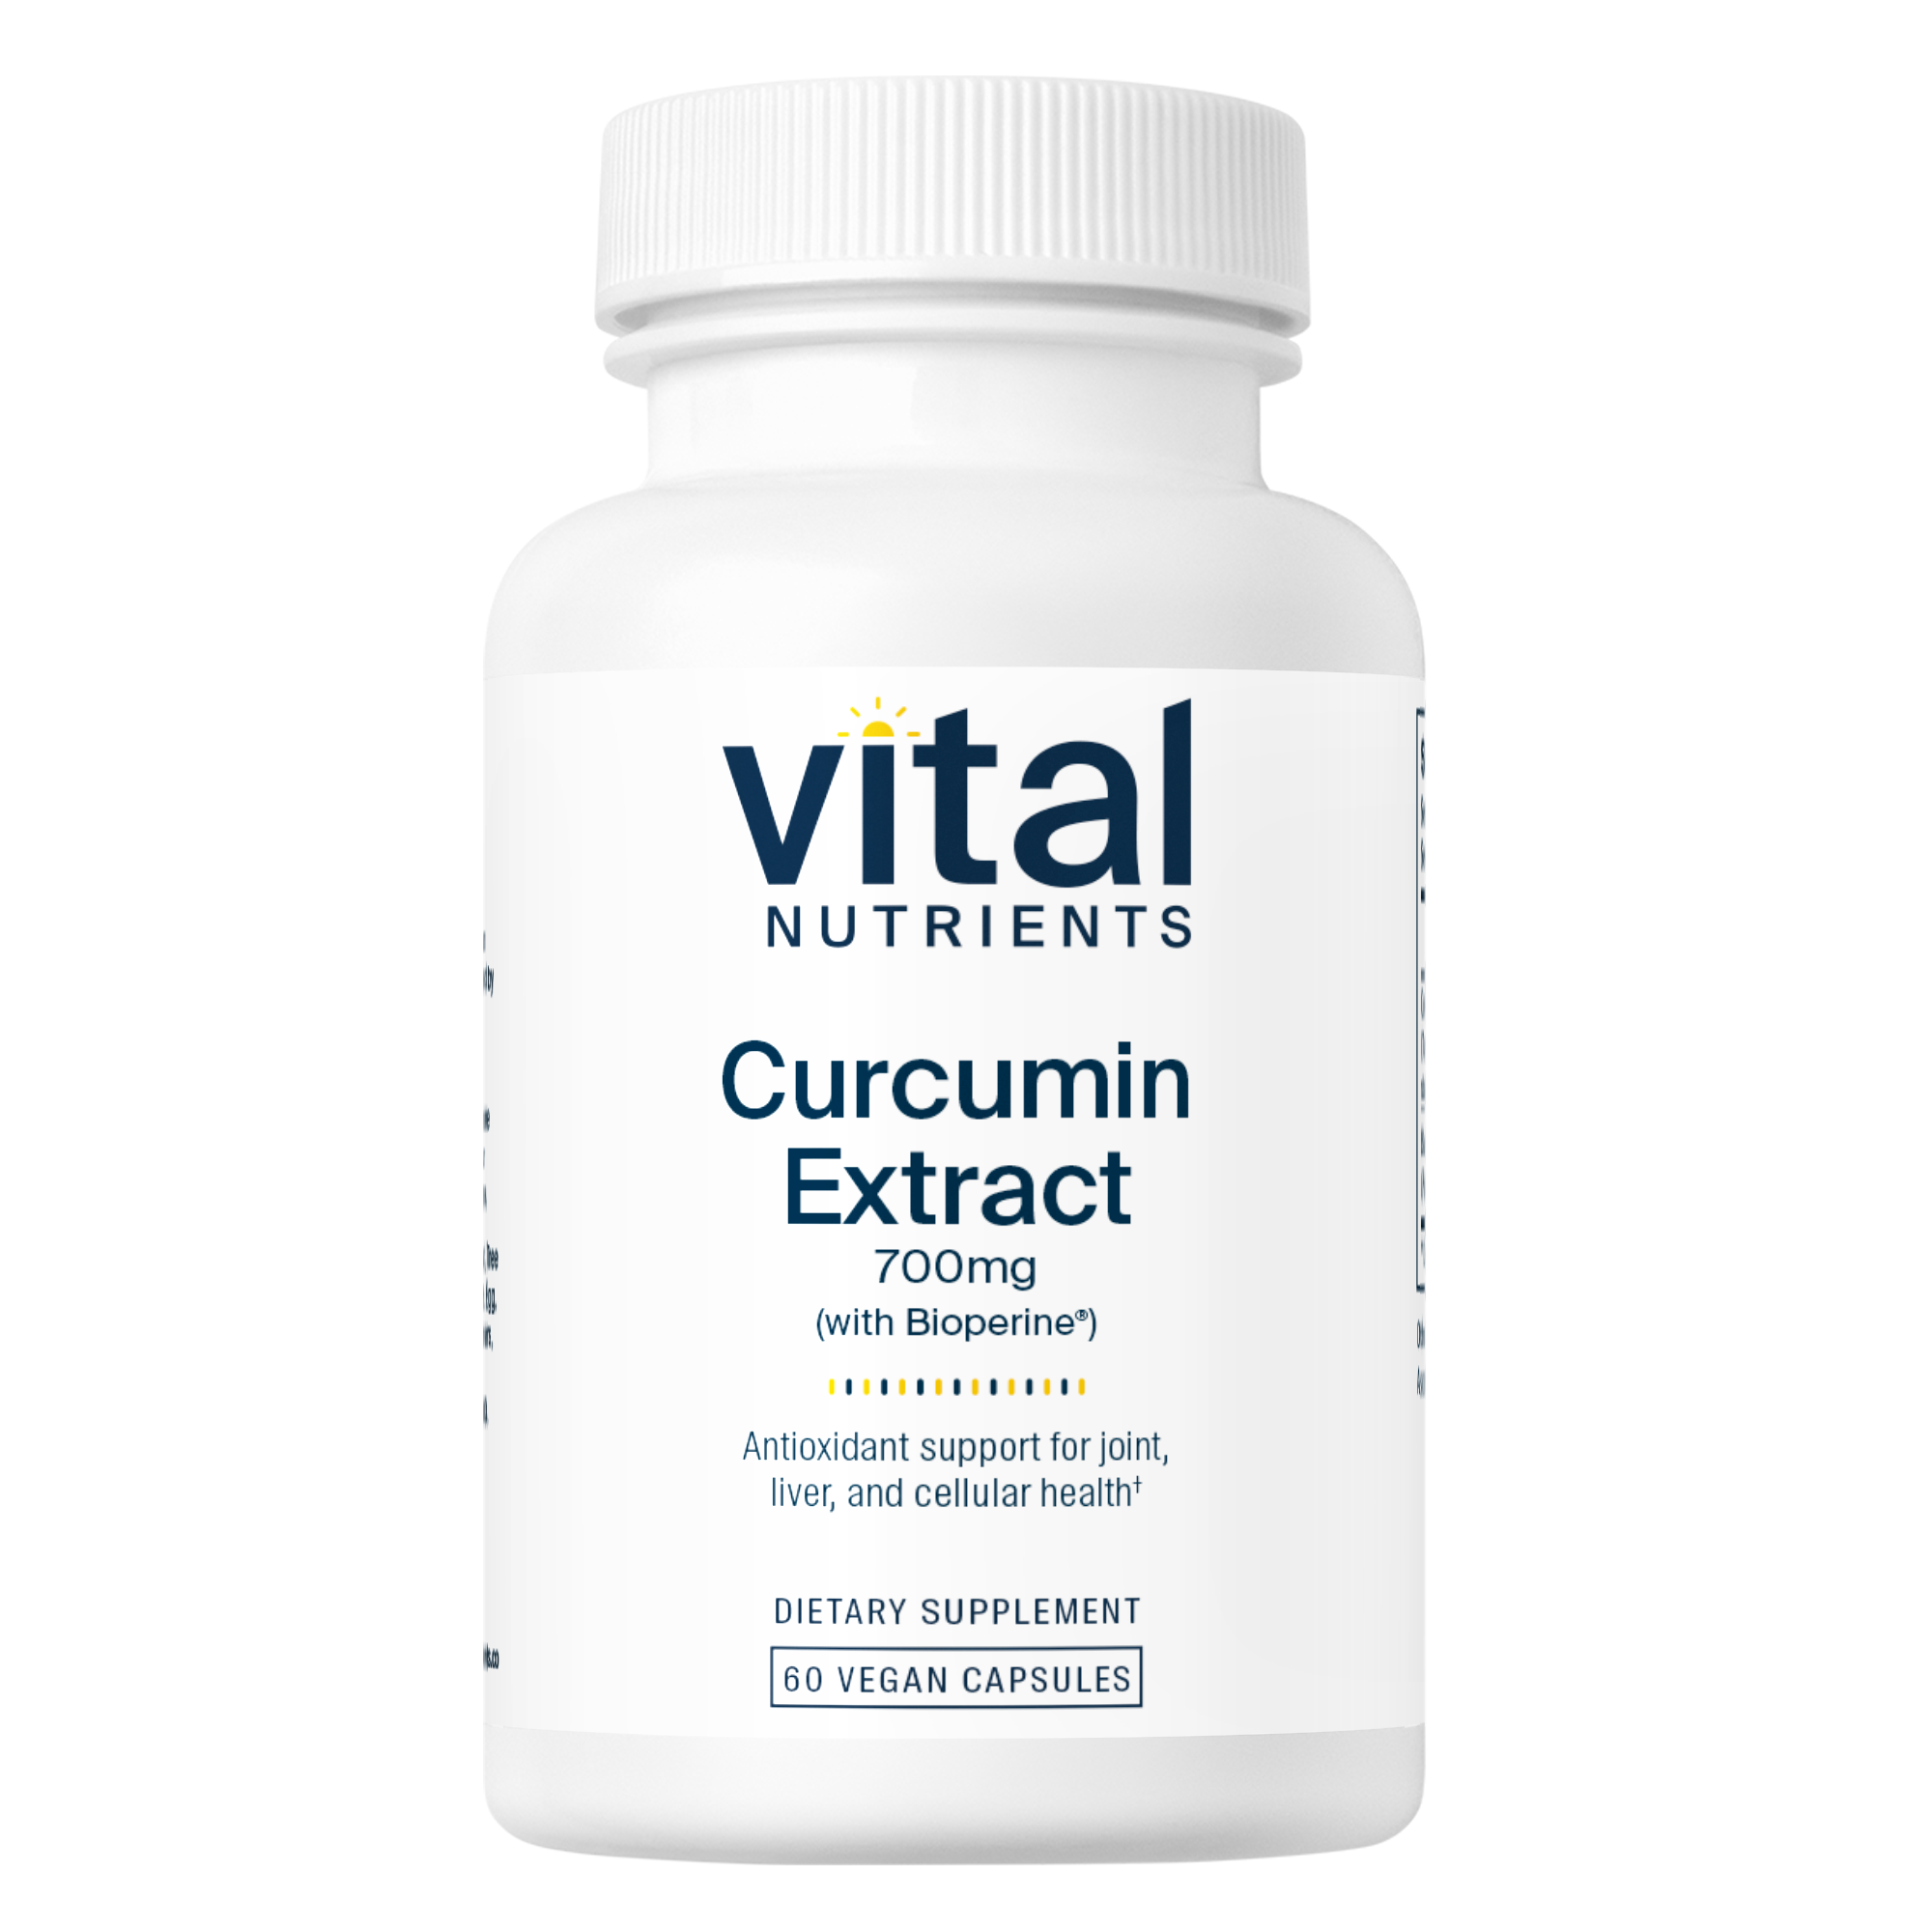 Curcumin Extract 700mg (with Bioperine®)